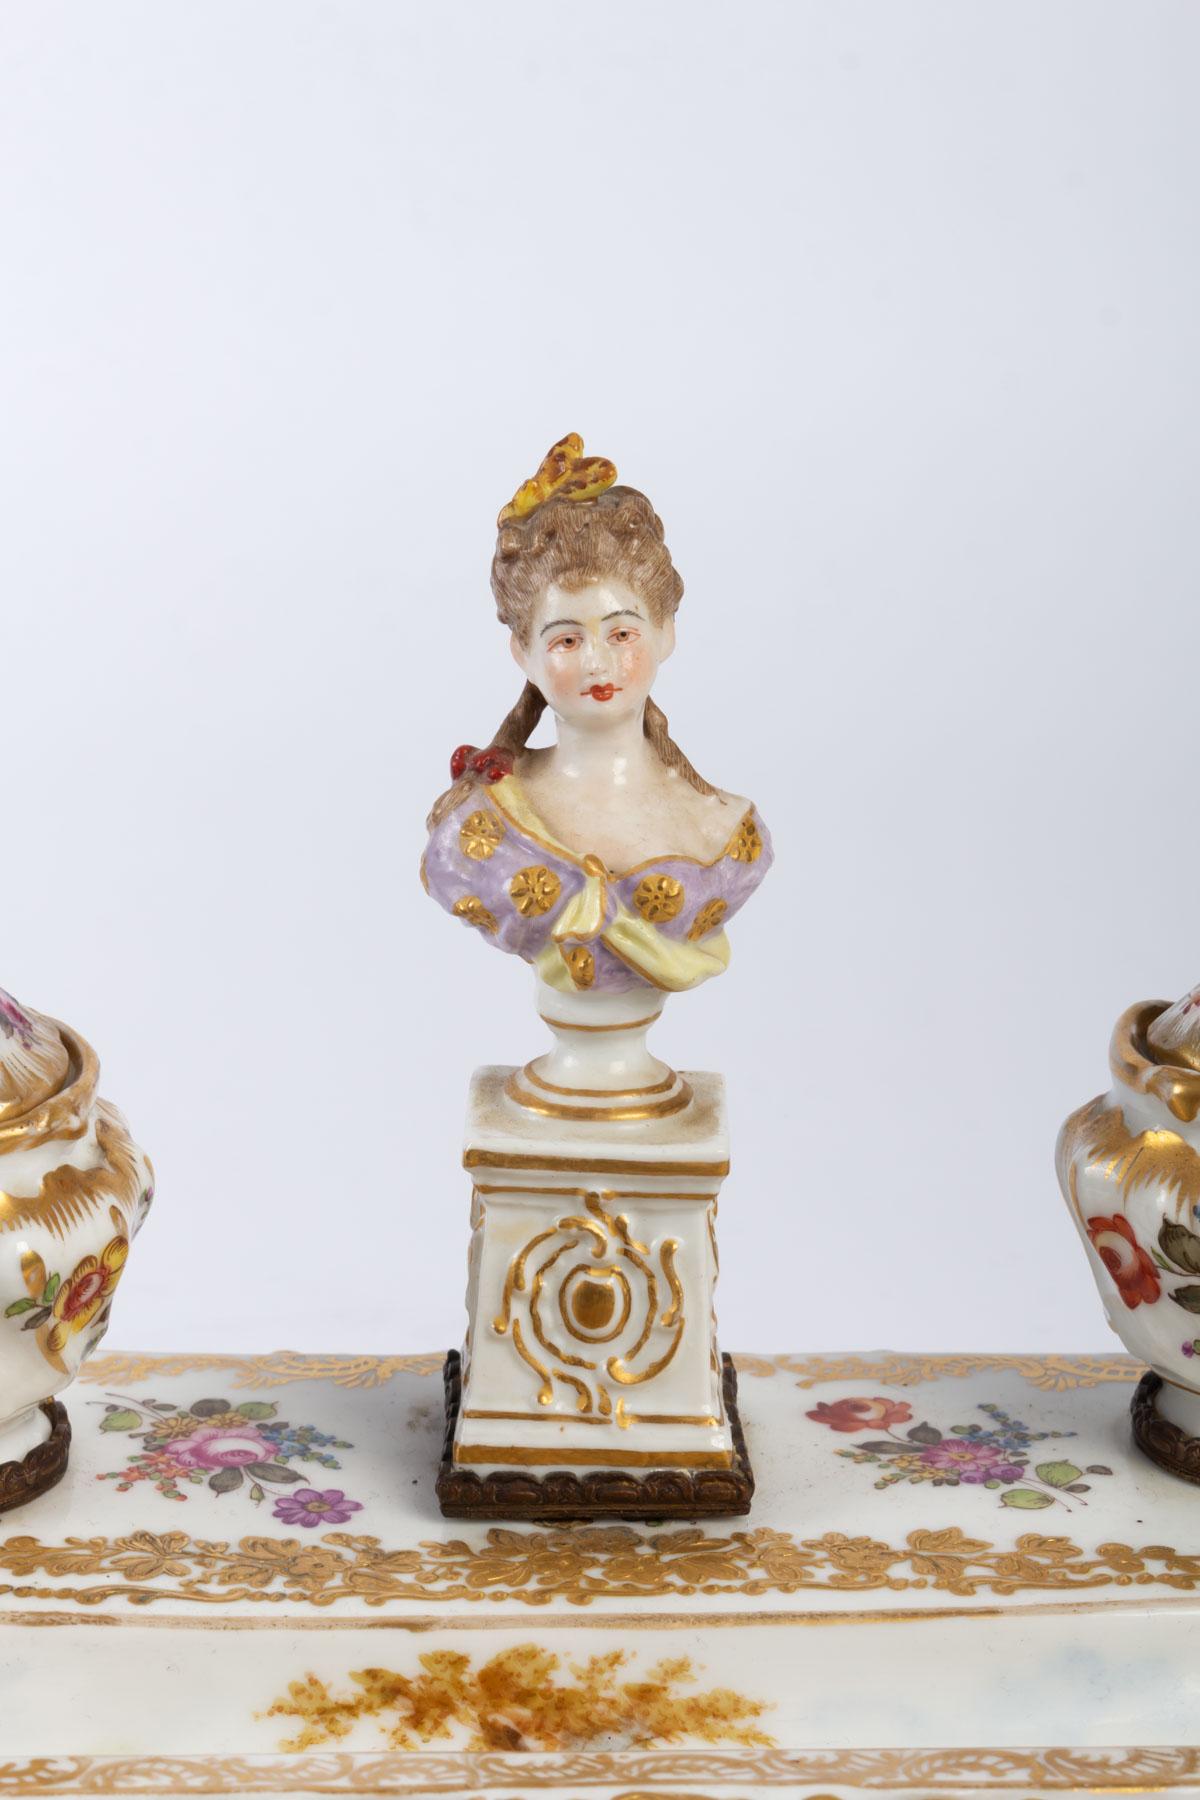 Inkwell in Meissen porcelain, 19th century, Napoleon III period.

Measures: H 19 cm, W 36 cm, D 16 cm.